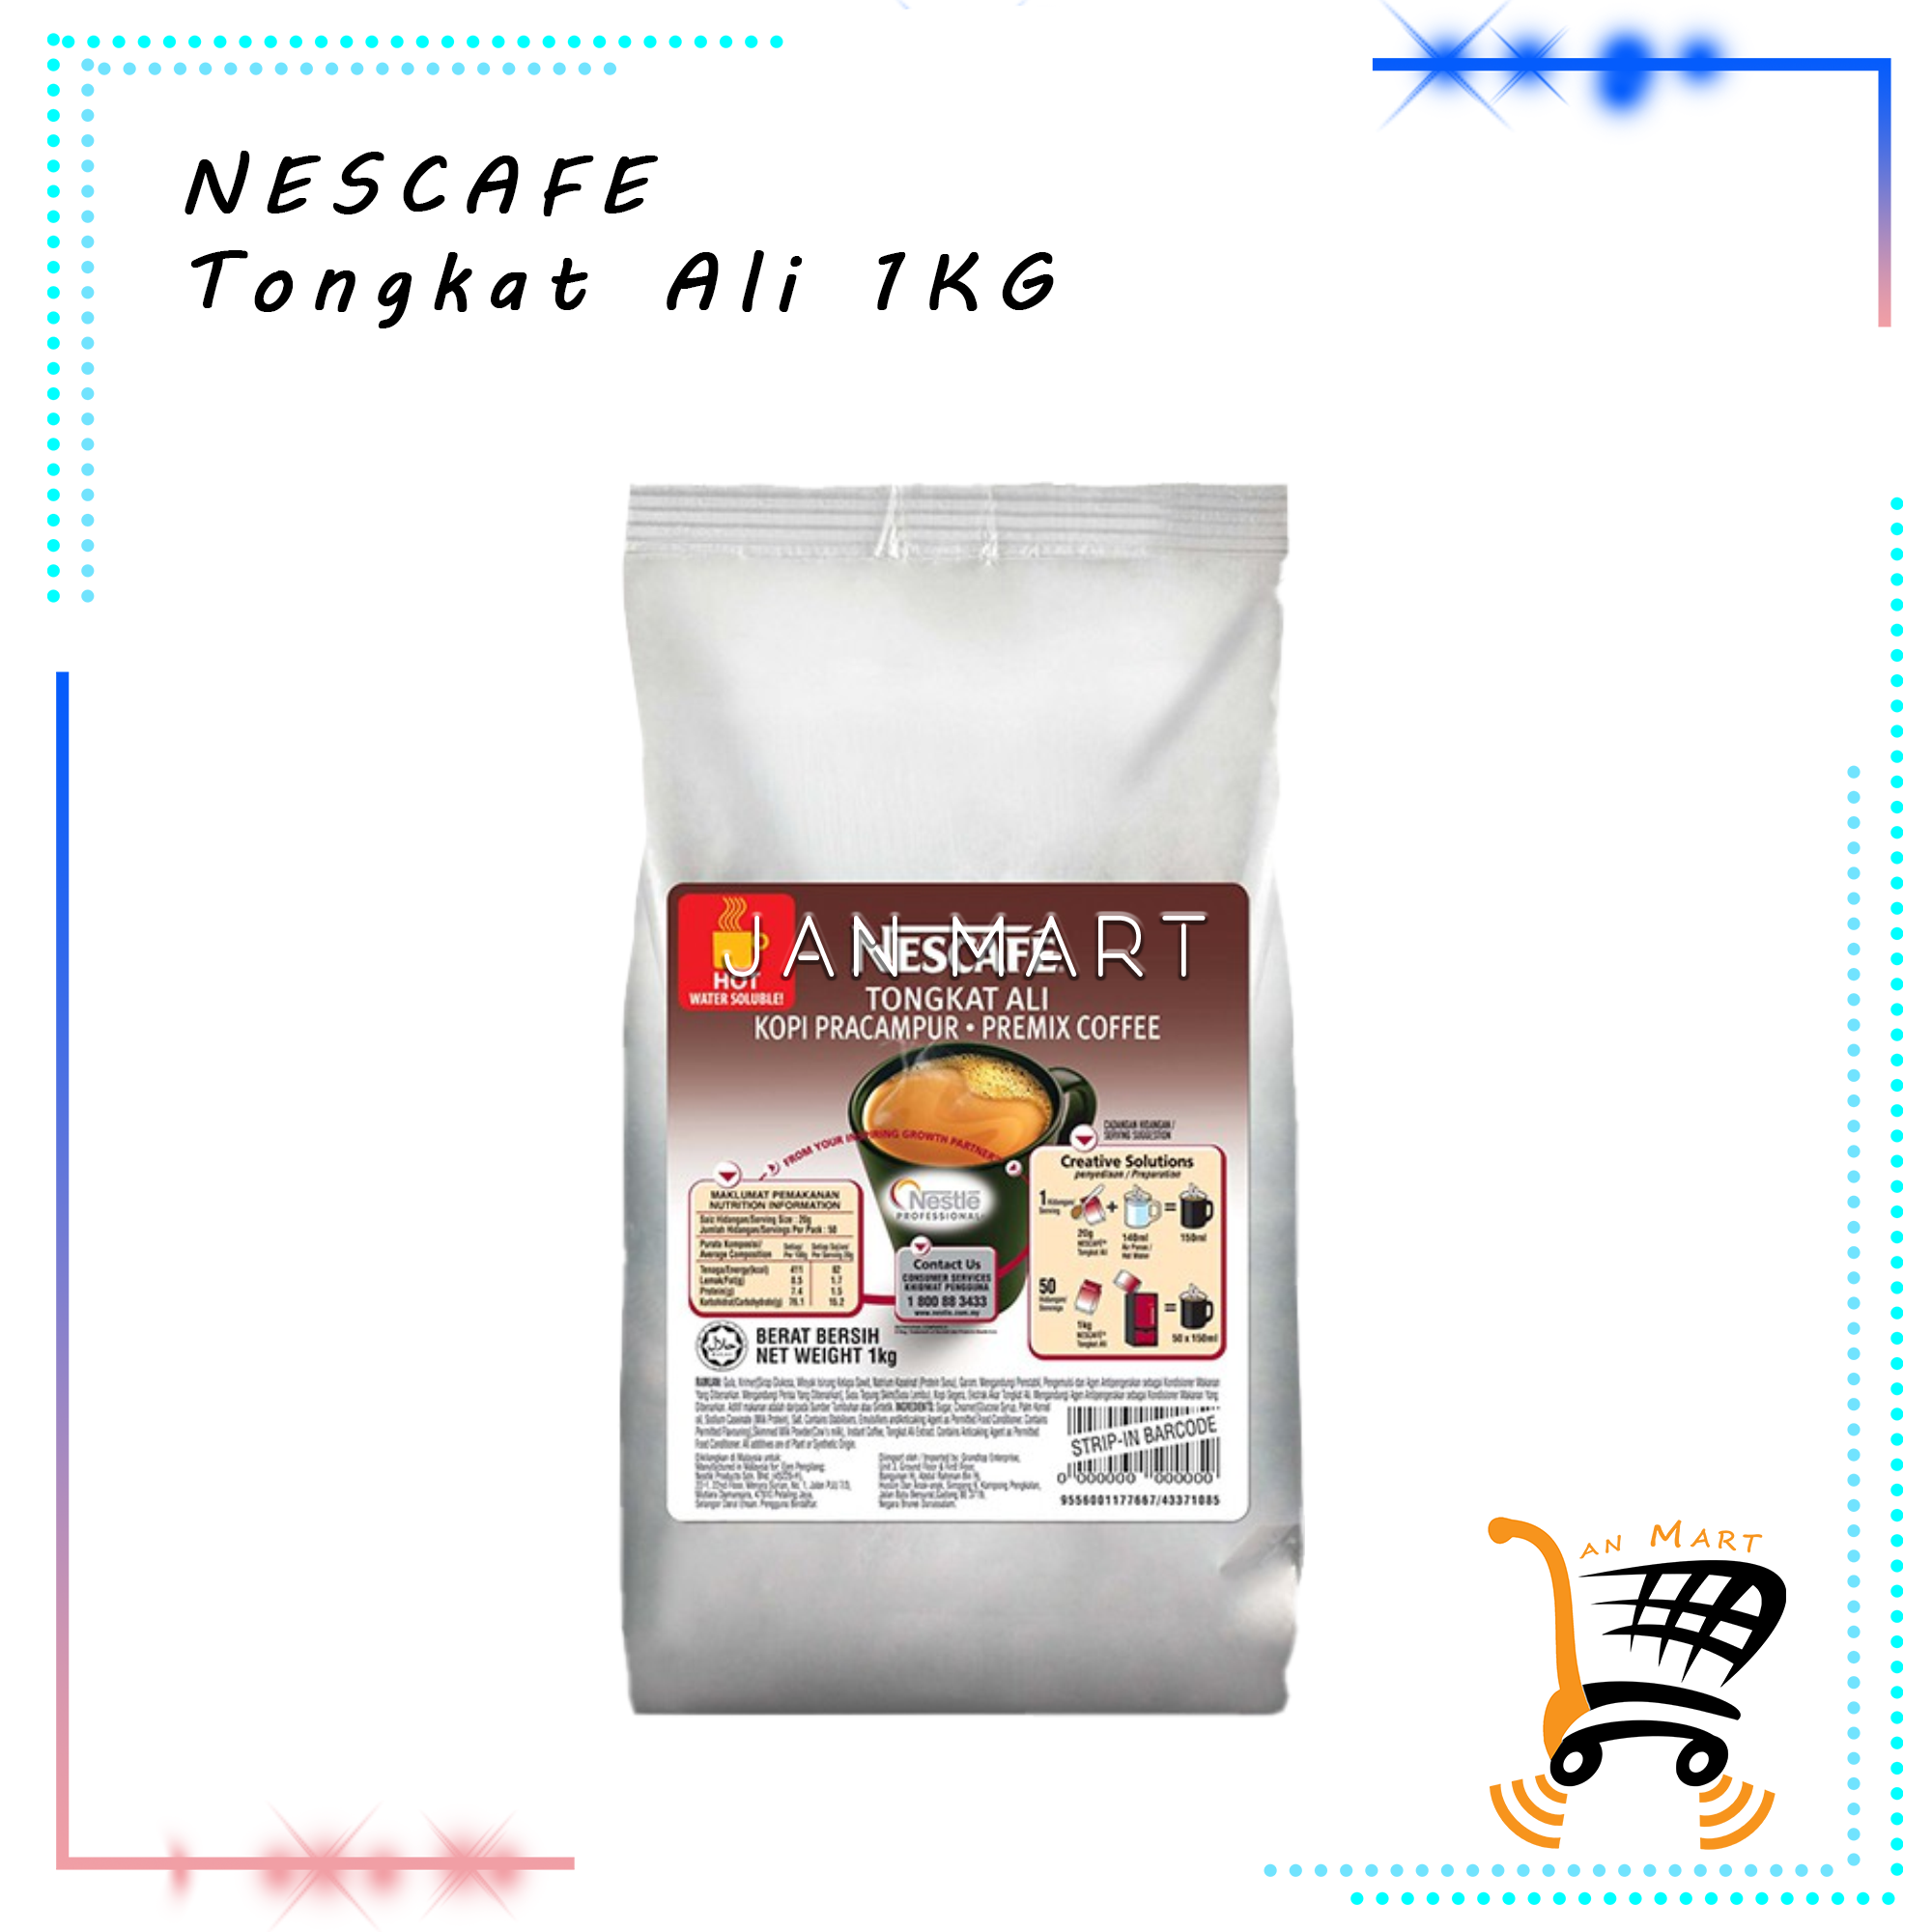 NESCAFE Tongkat Ali Premix Coffee 1KG